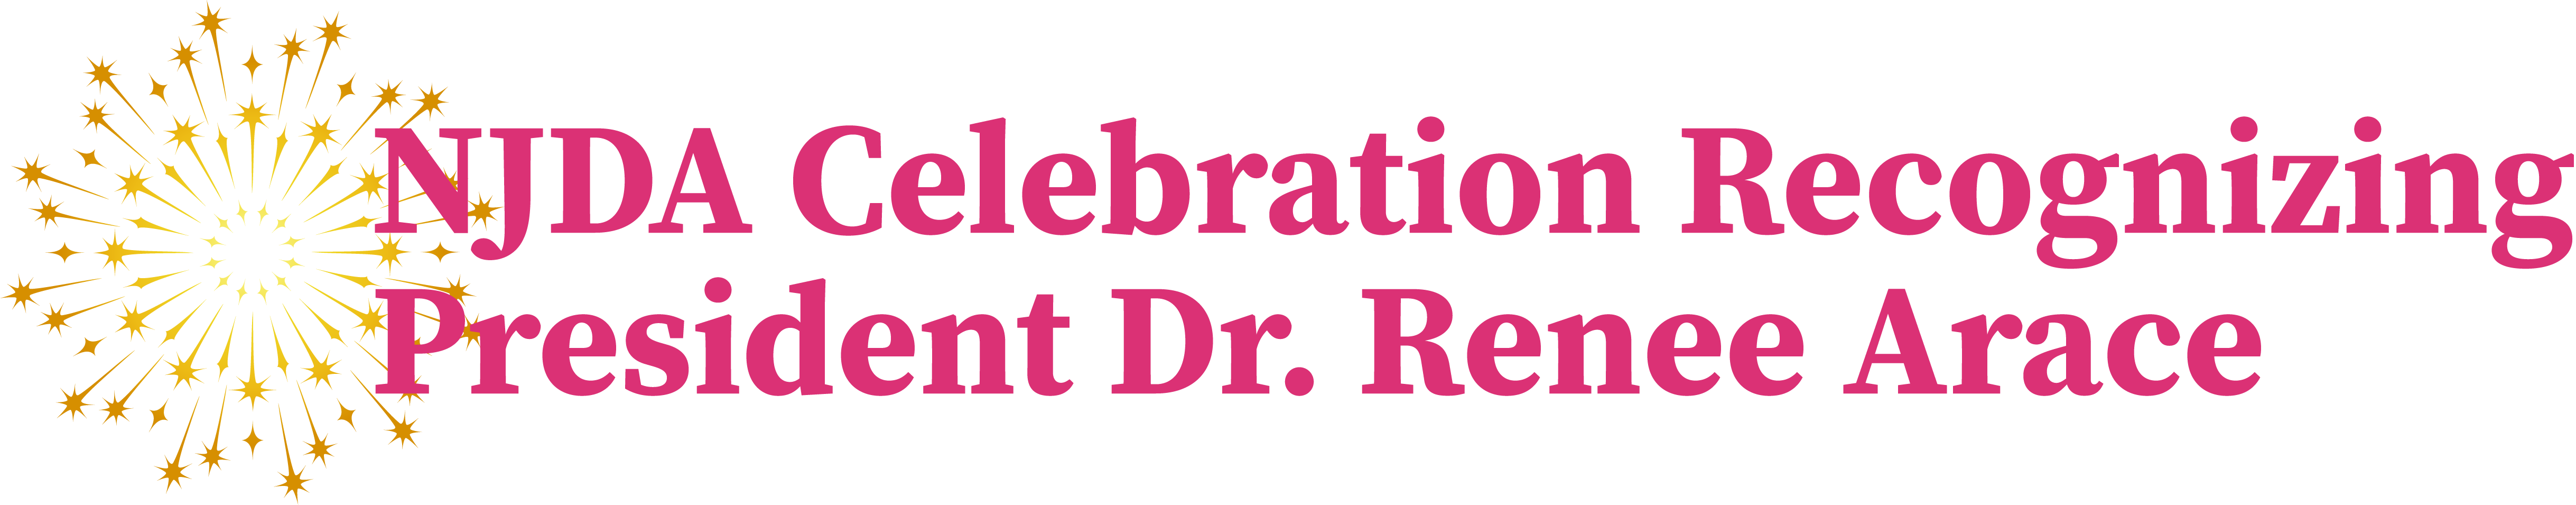 NJDA Celebration Recognizing President Dr. Renee Arace